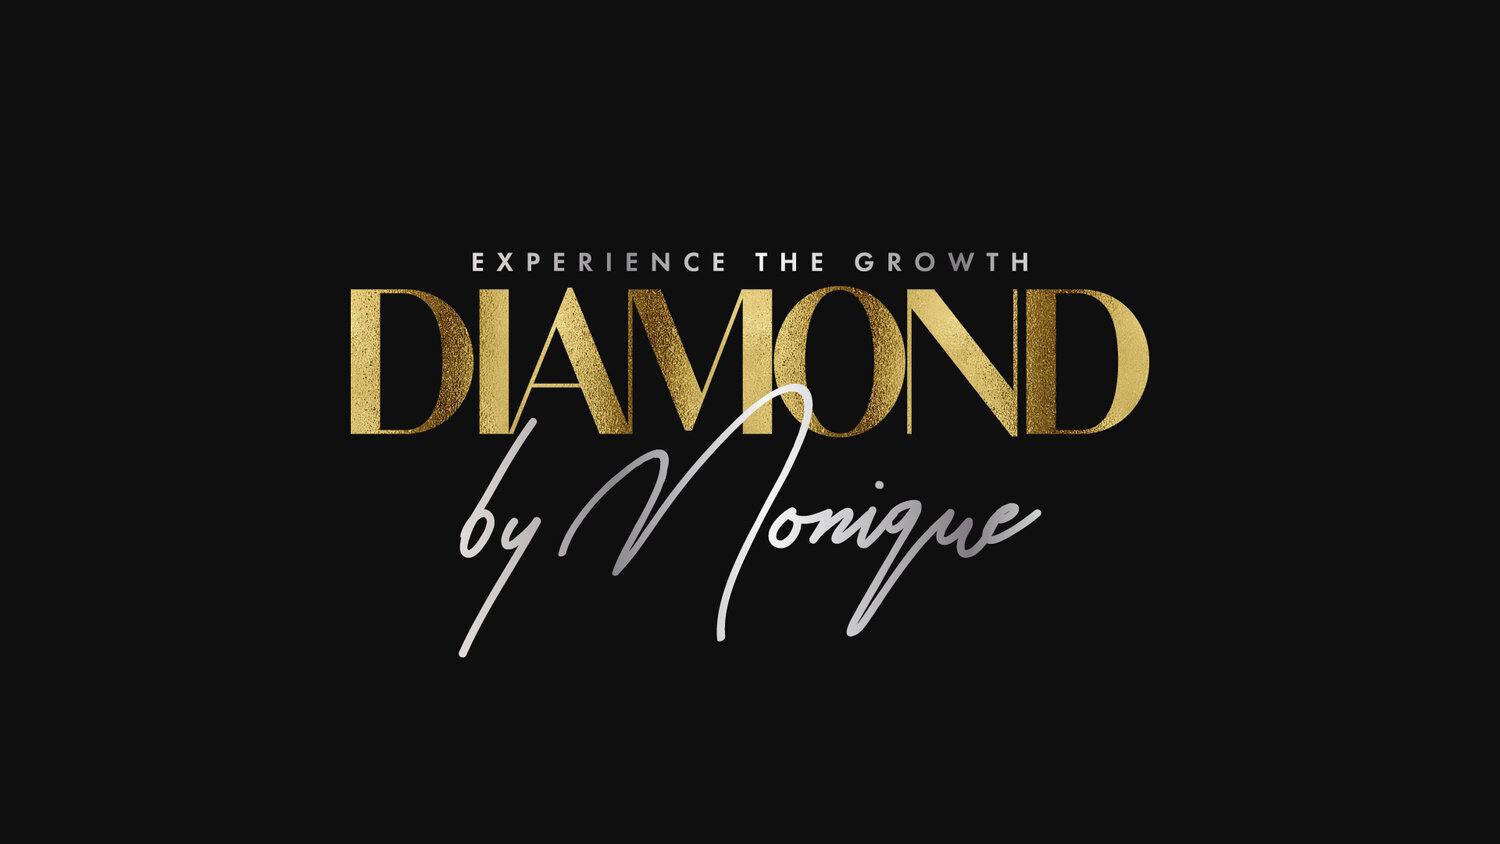 By monique diamond ABOUT DIAMOND